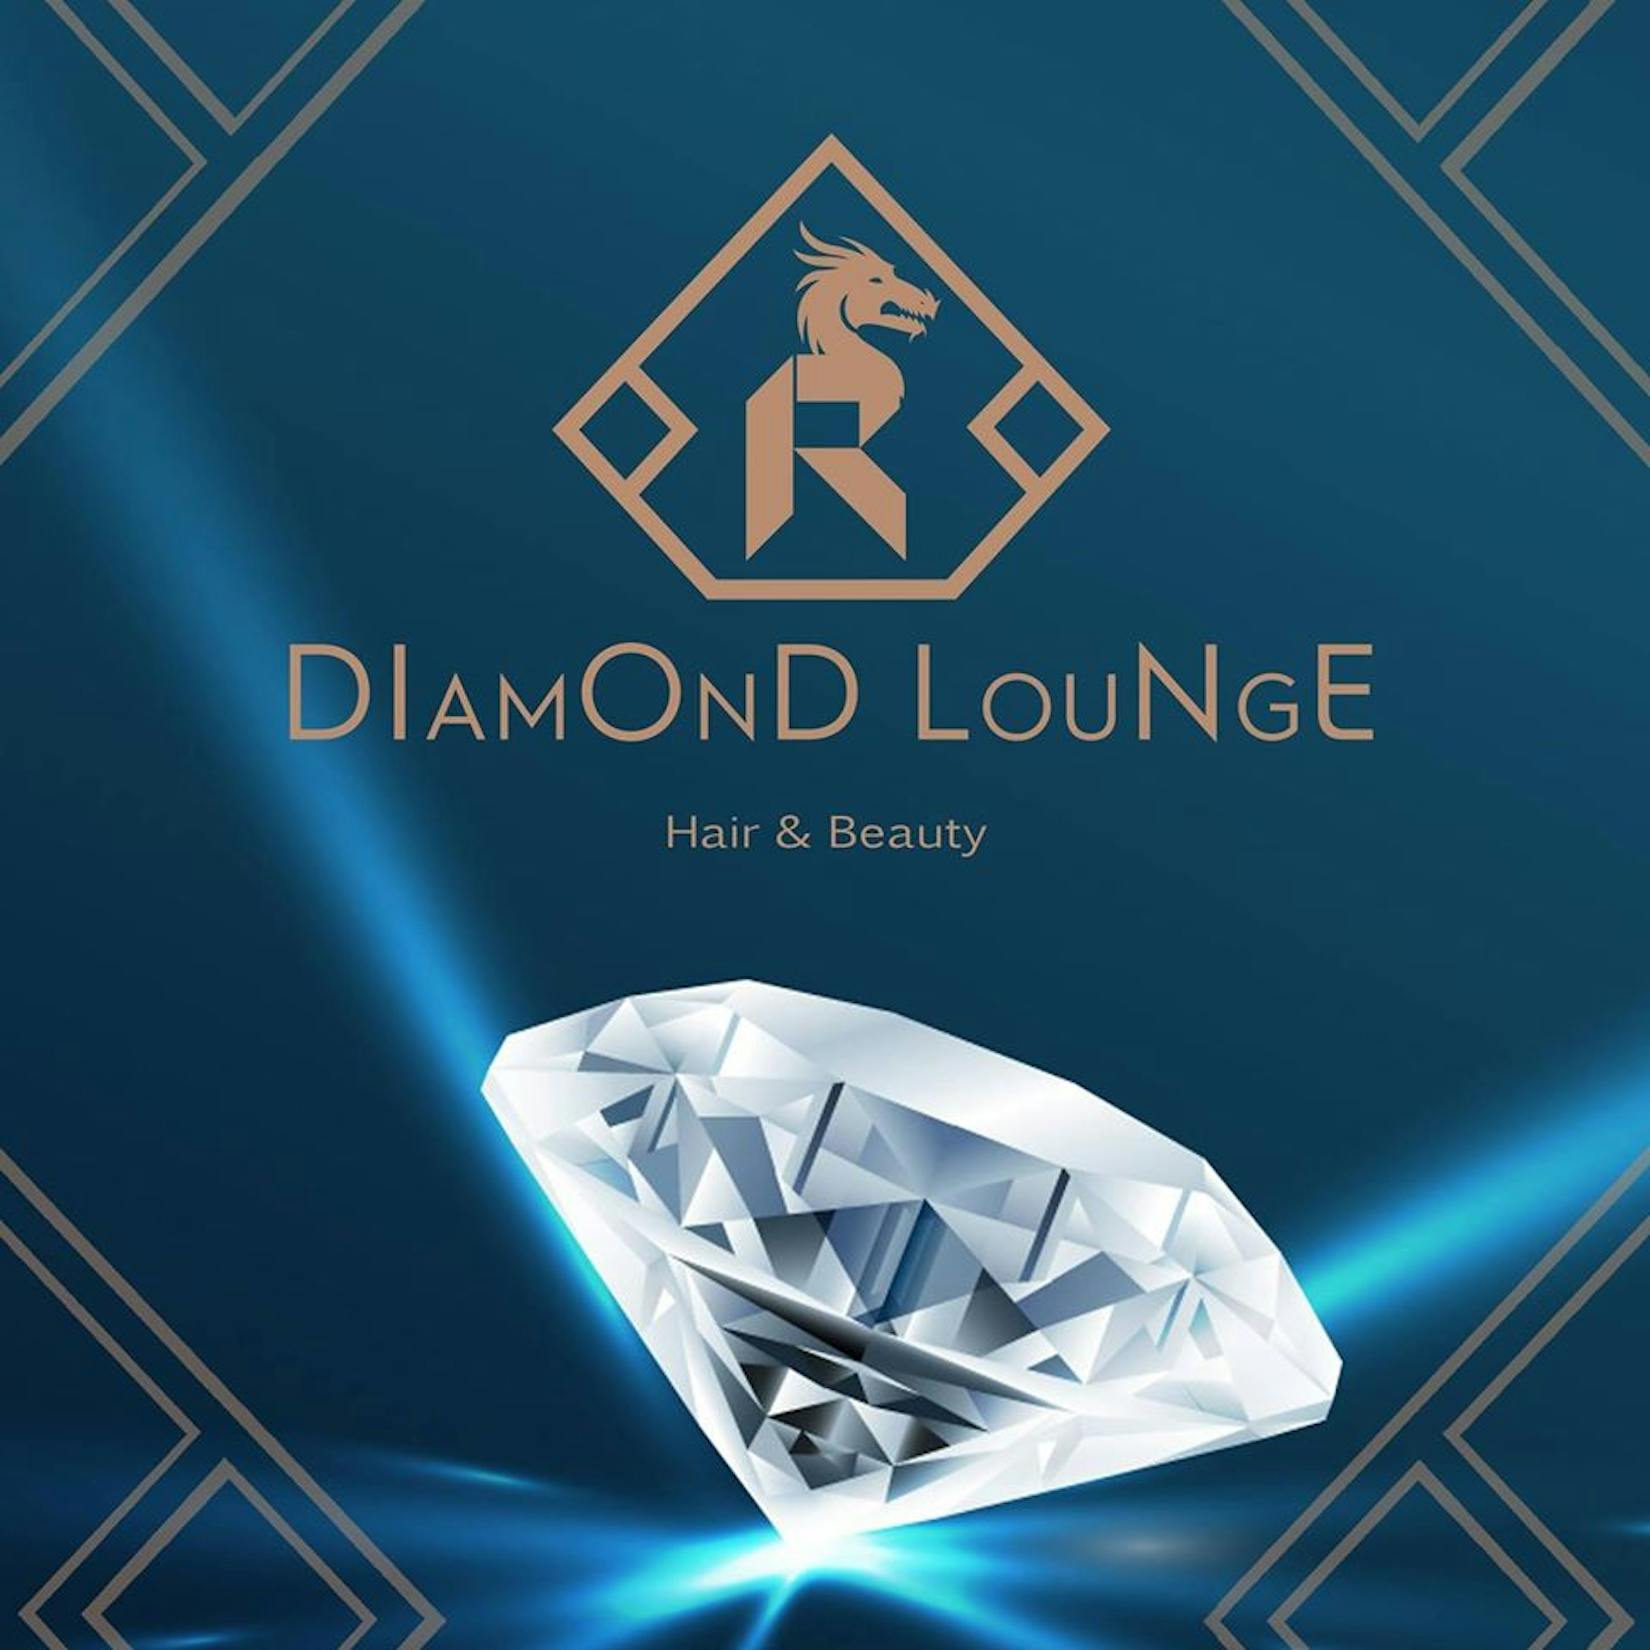 Diamond Lounge - Hair & Beauty | Beauty